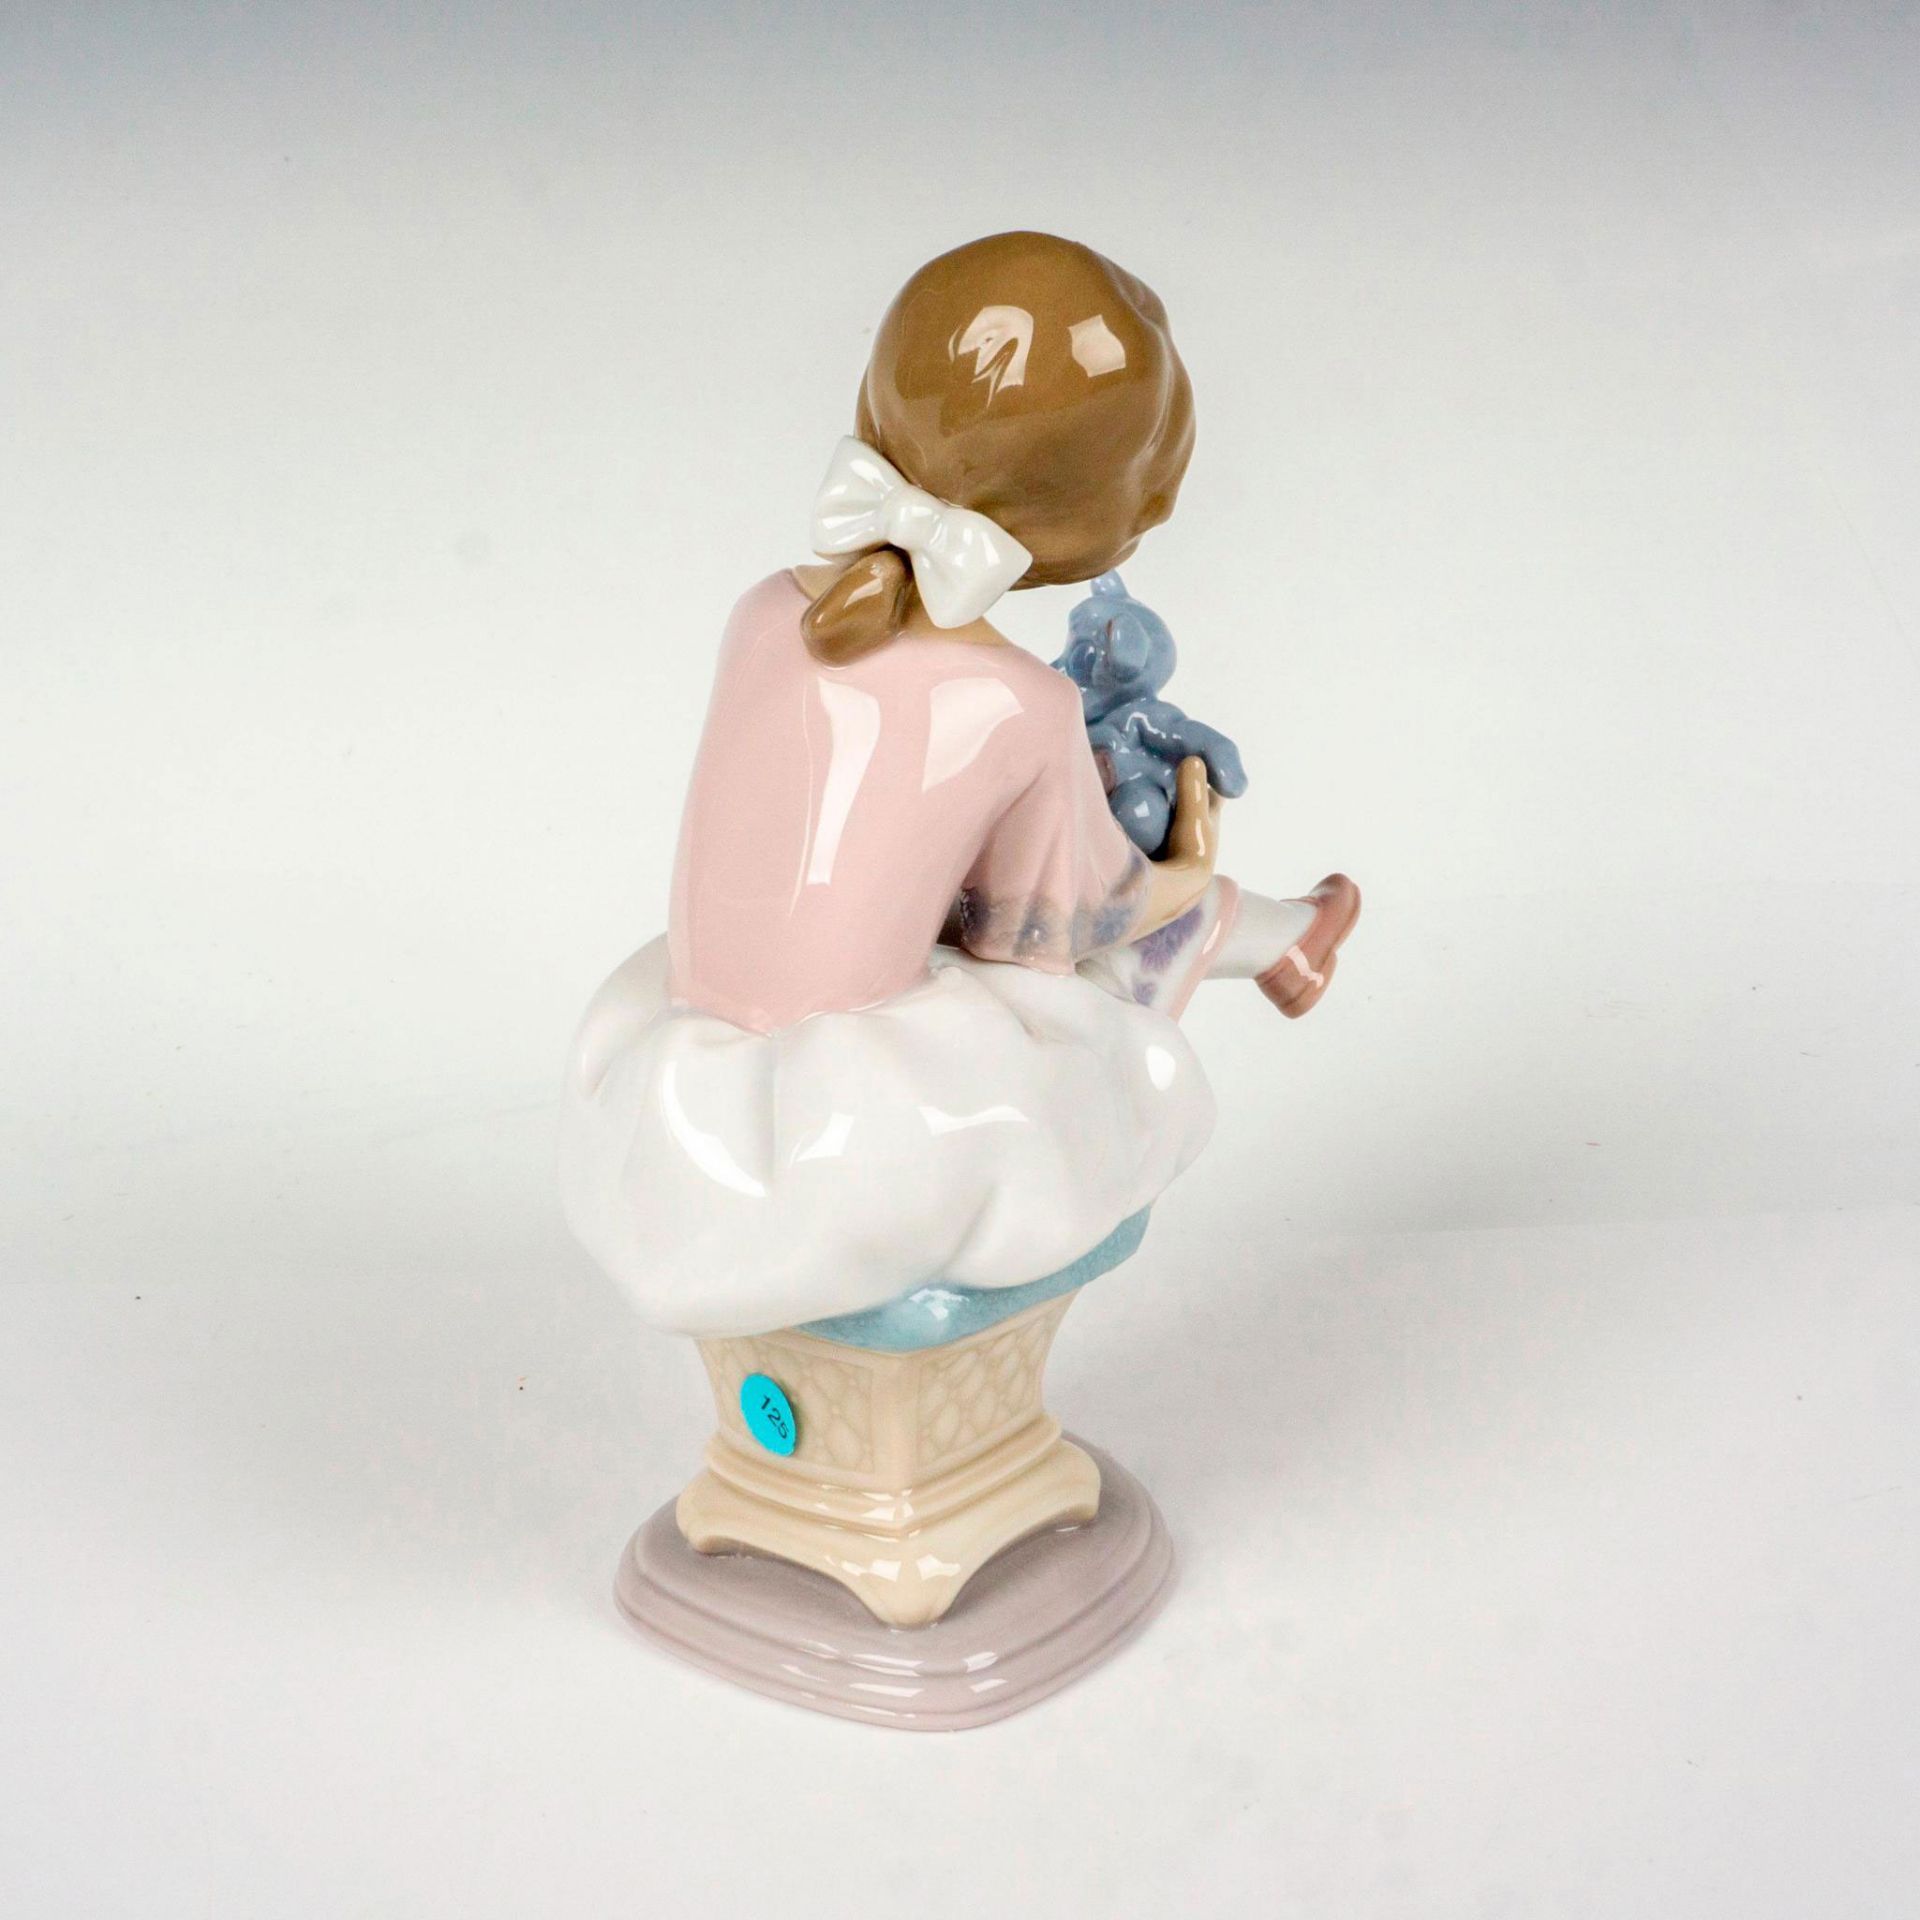 Best Friend 1007620 - Lladro Porcelain Figurine - Image 2 of 4